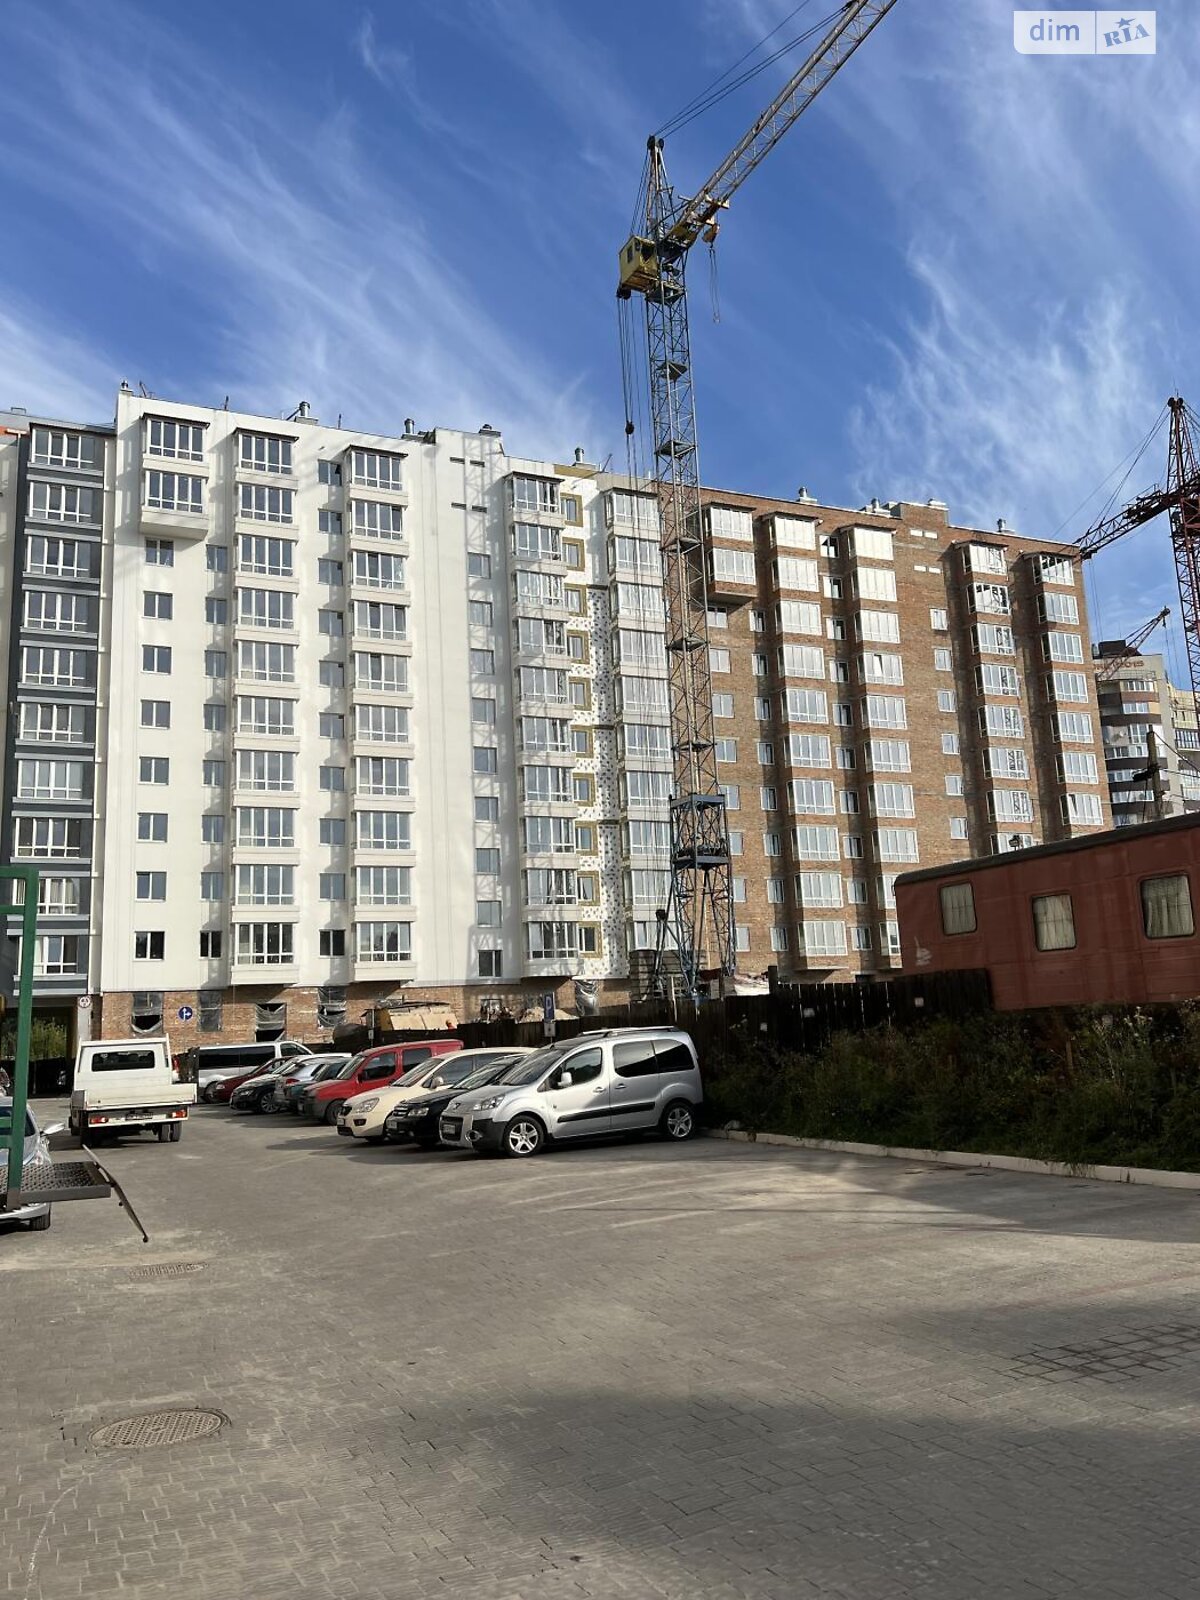 Продажа однокомнатной квартиры в Ровно, на ул. Гайдамацкая, район Чайка фото 1